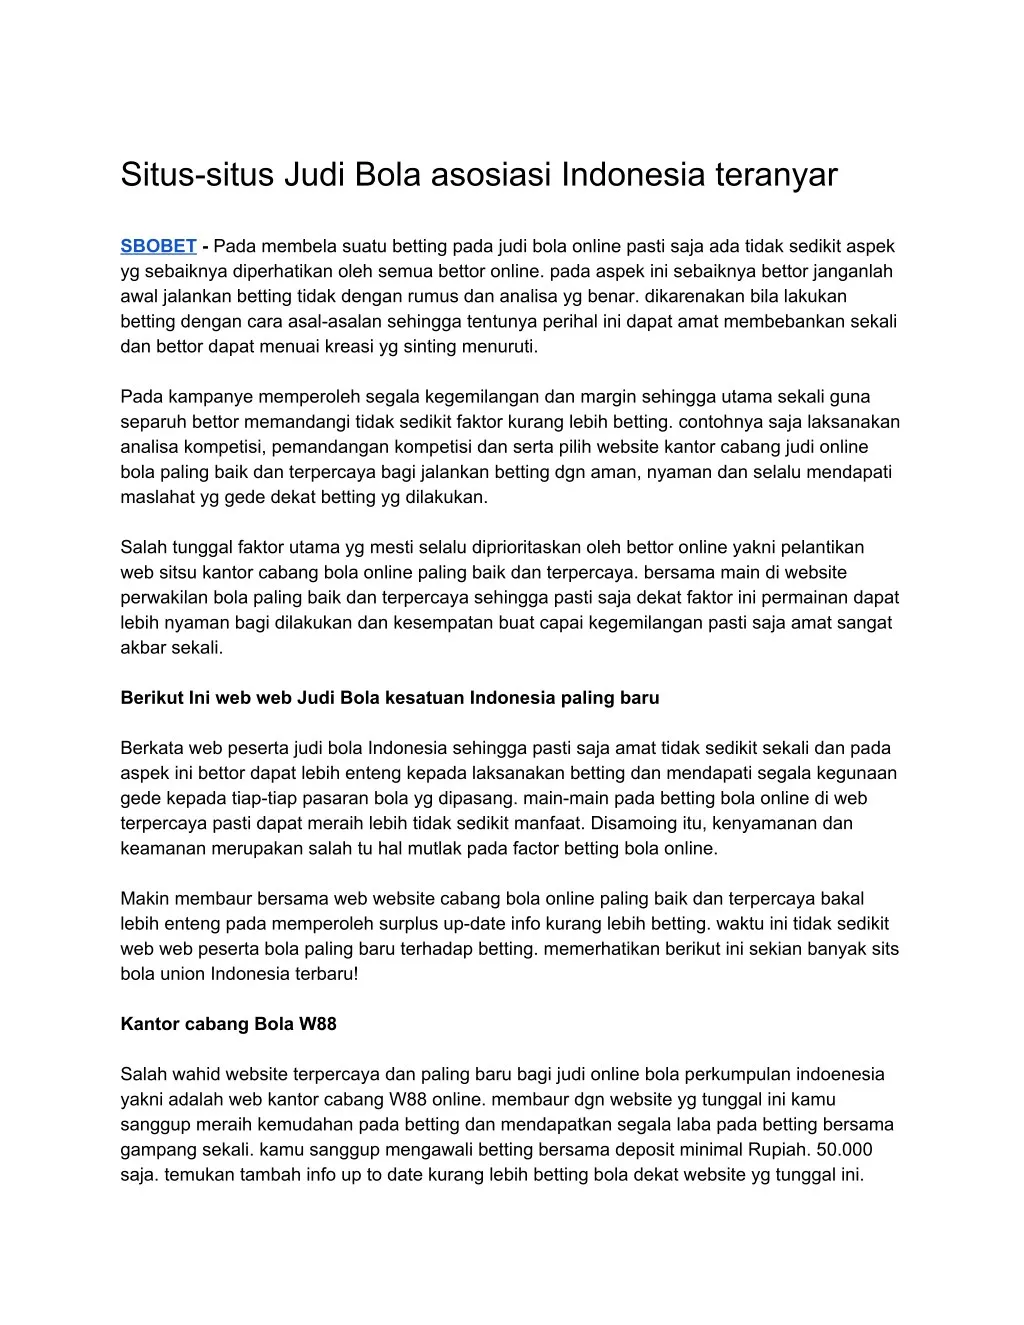 situs situs judi bola asosiasi indonesia teranyar